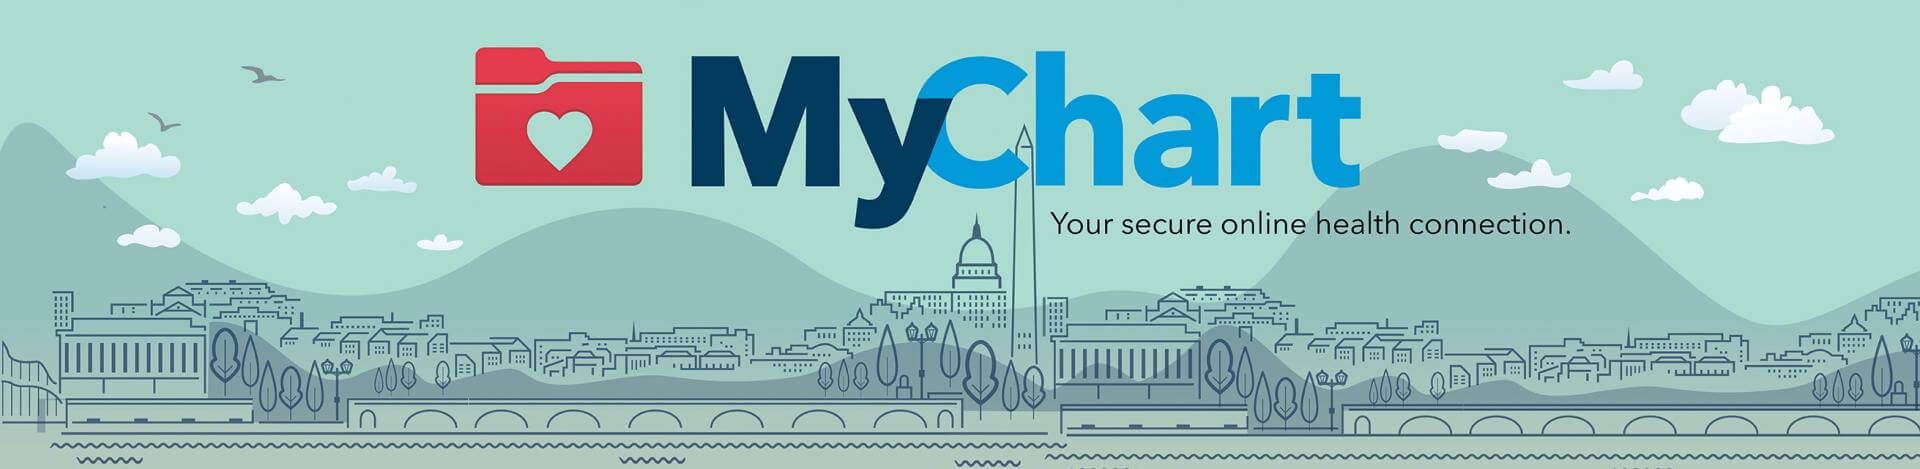 MyChart, your secure online health connection